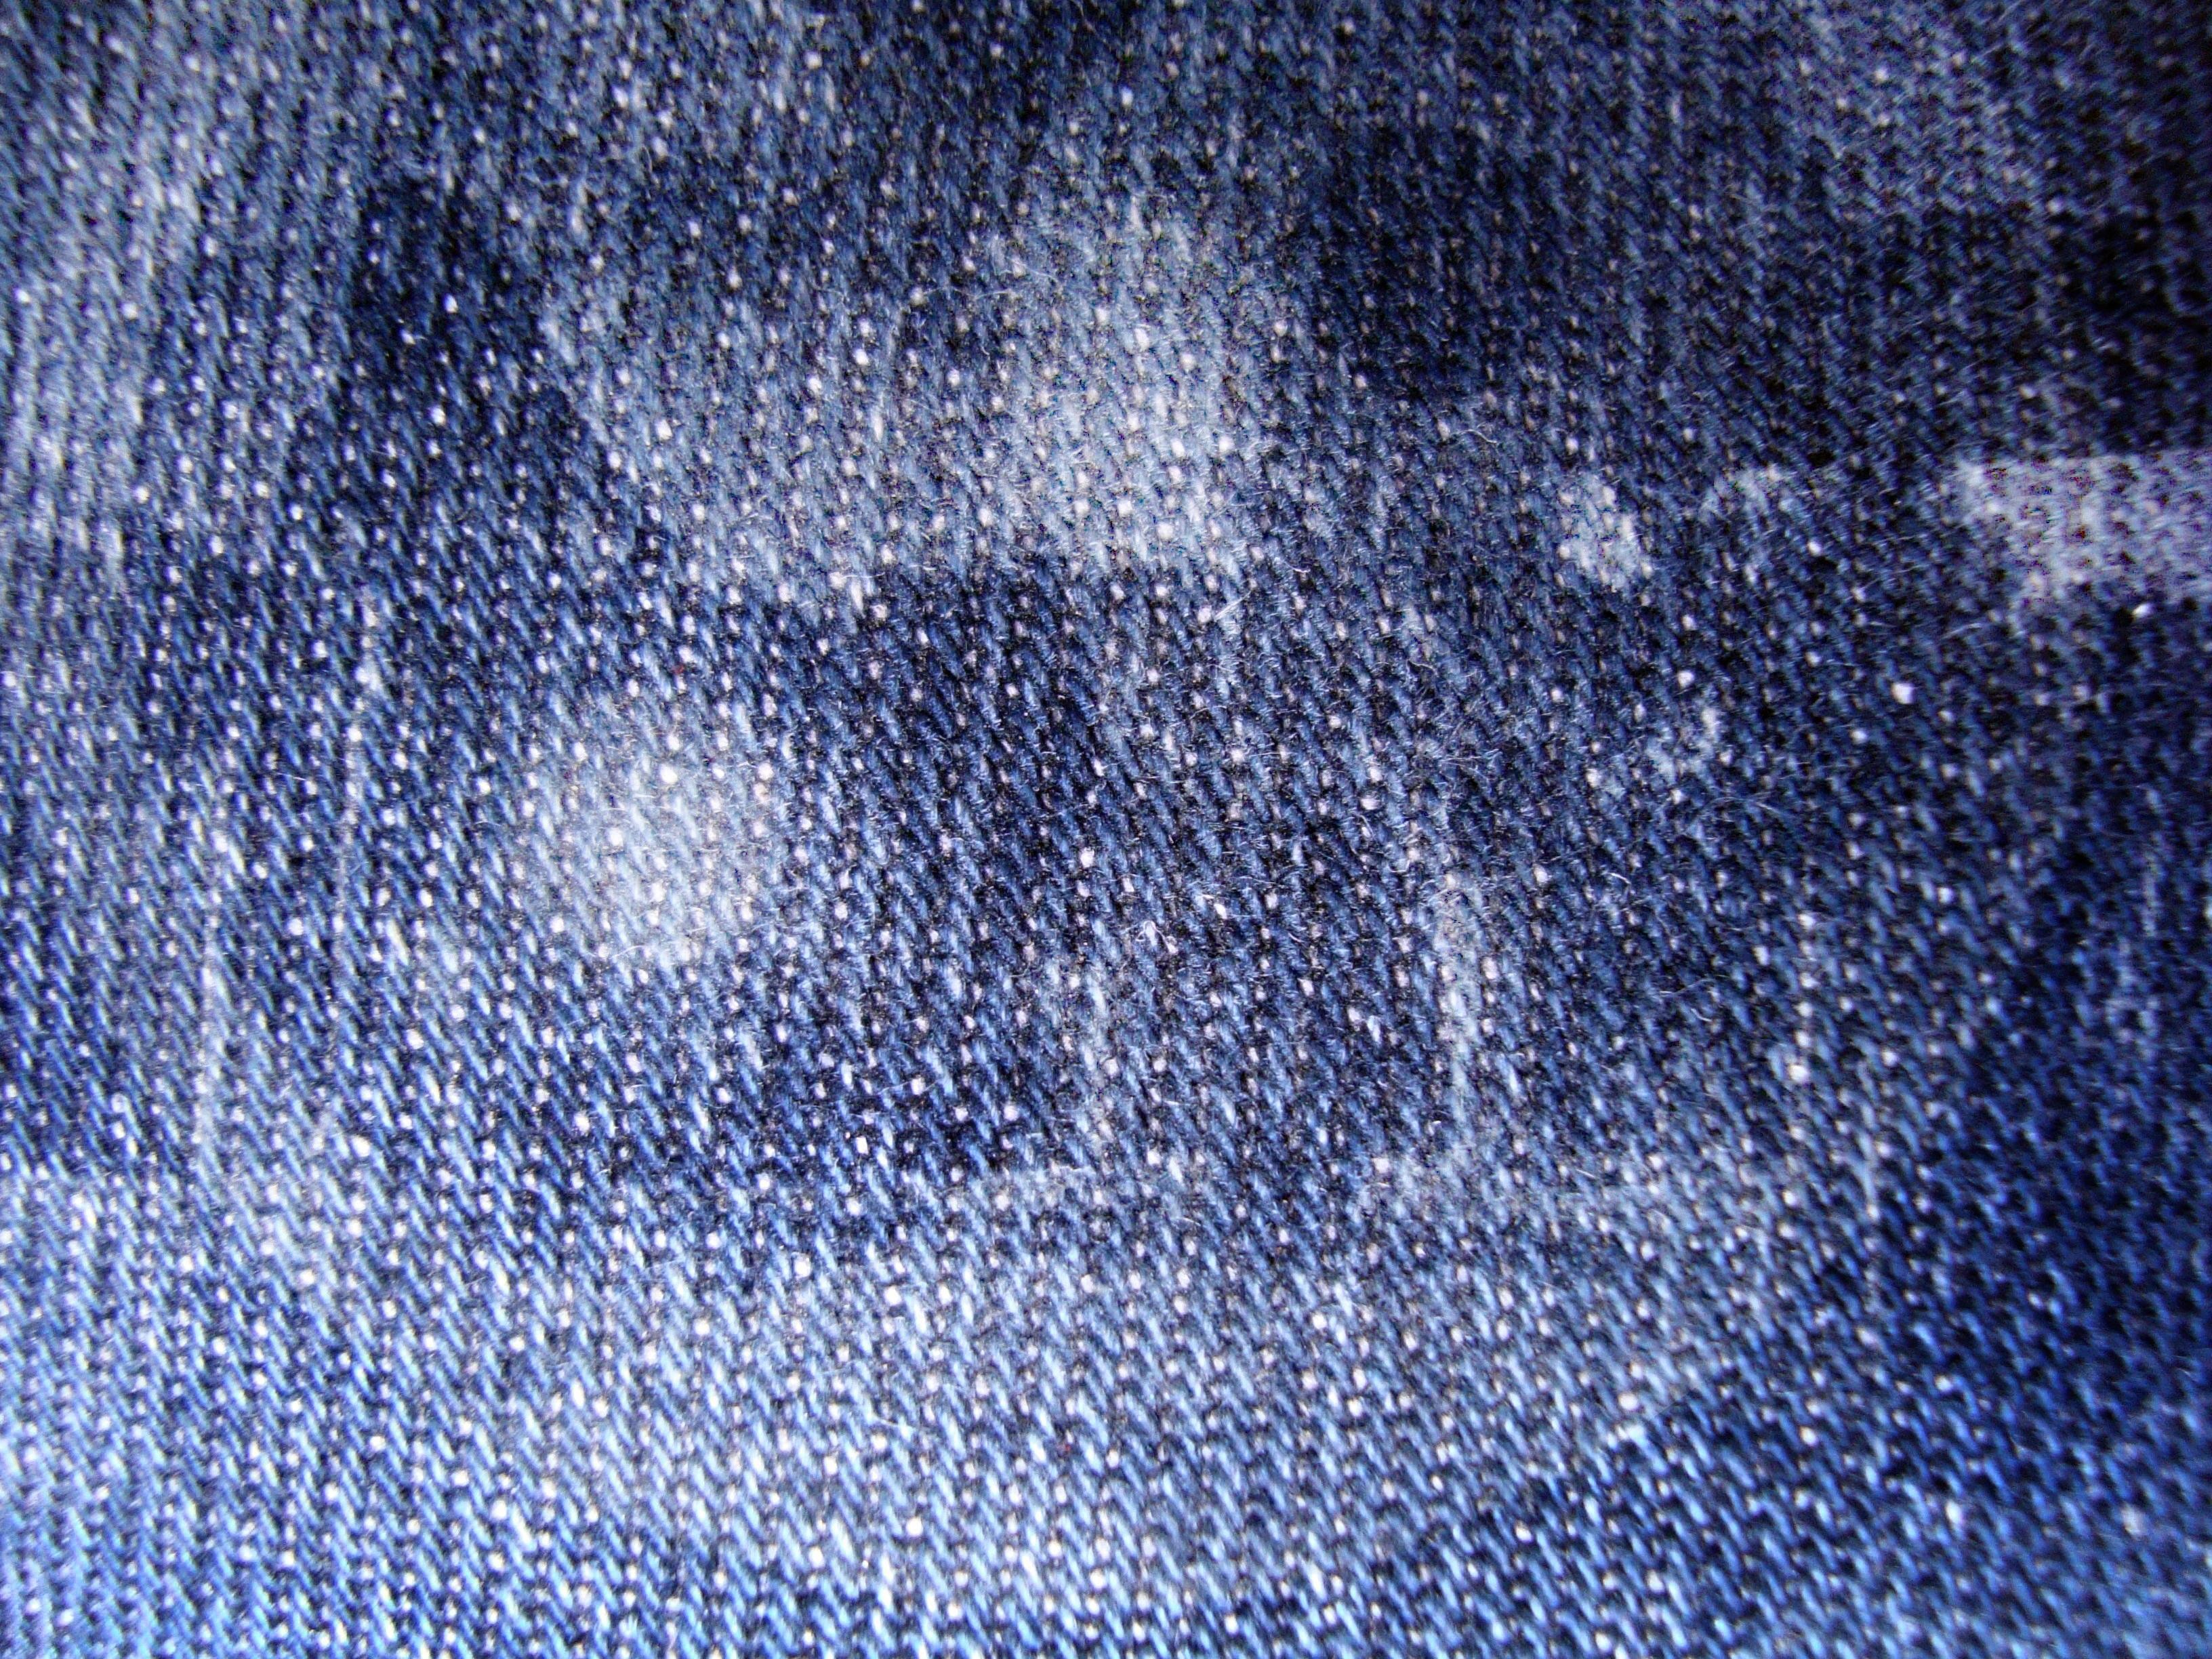 General 3264x2448 jeans texture pattern closeup macro